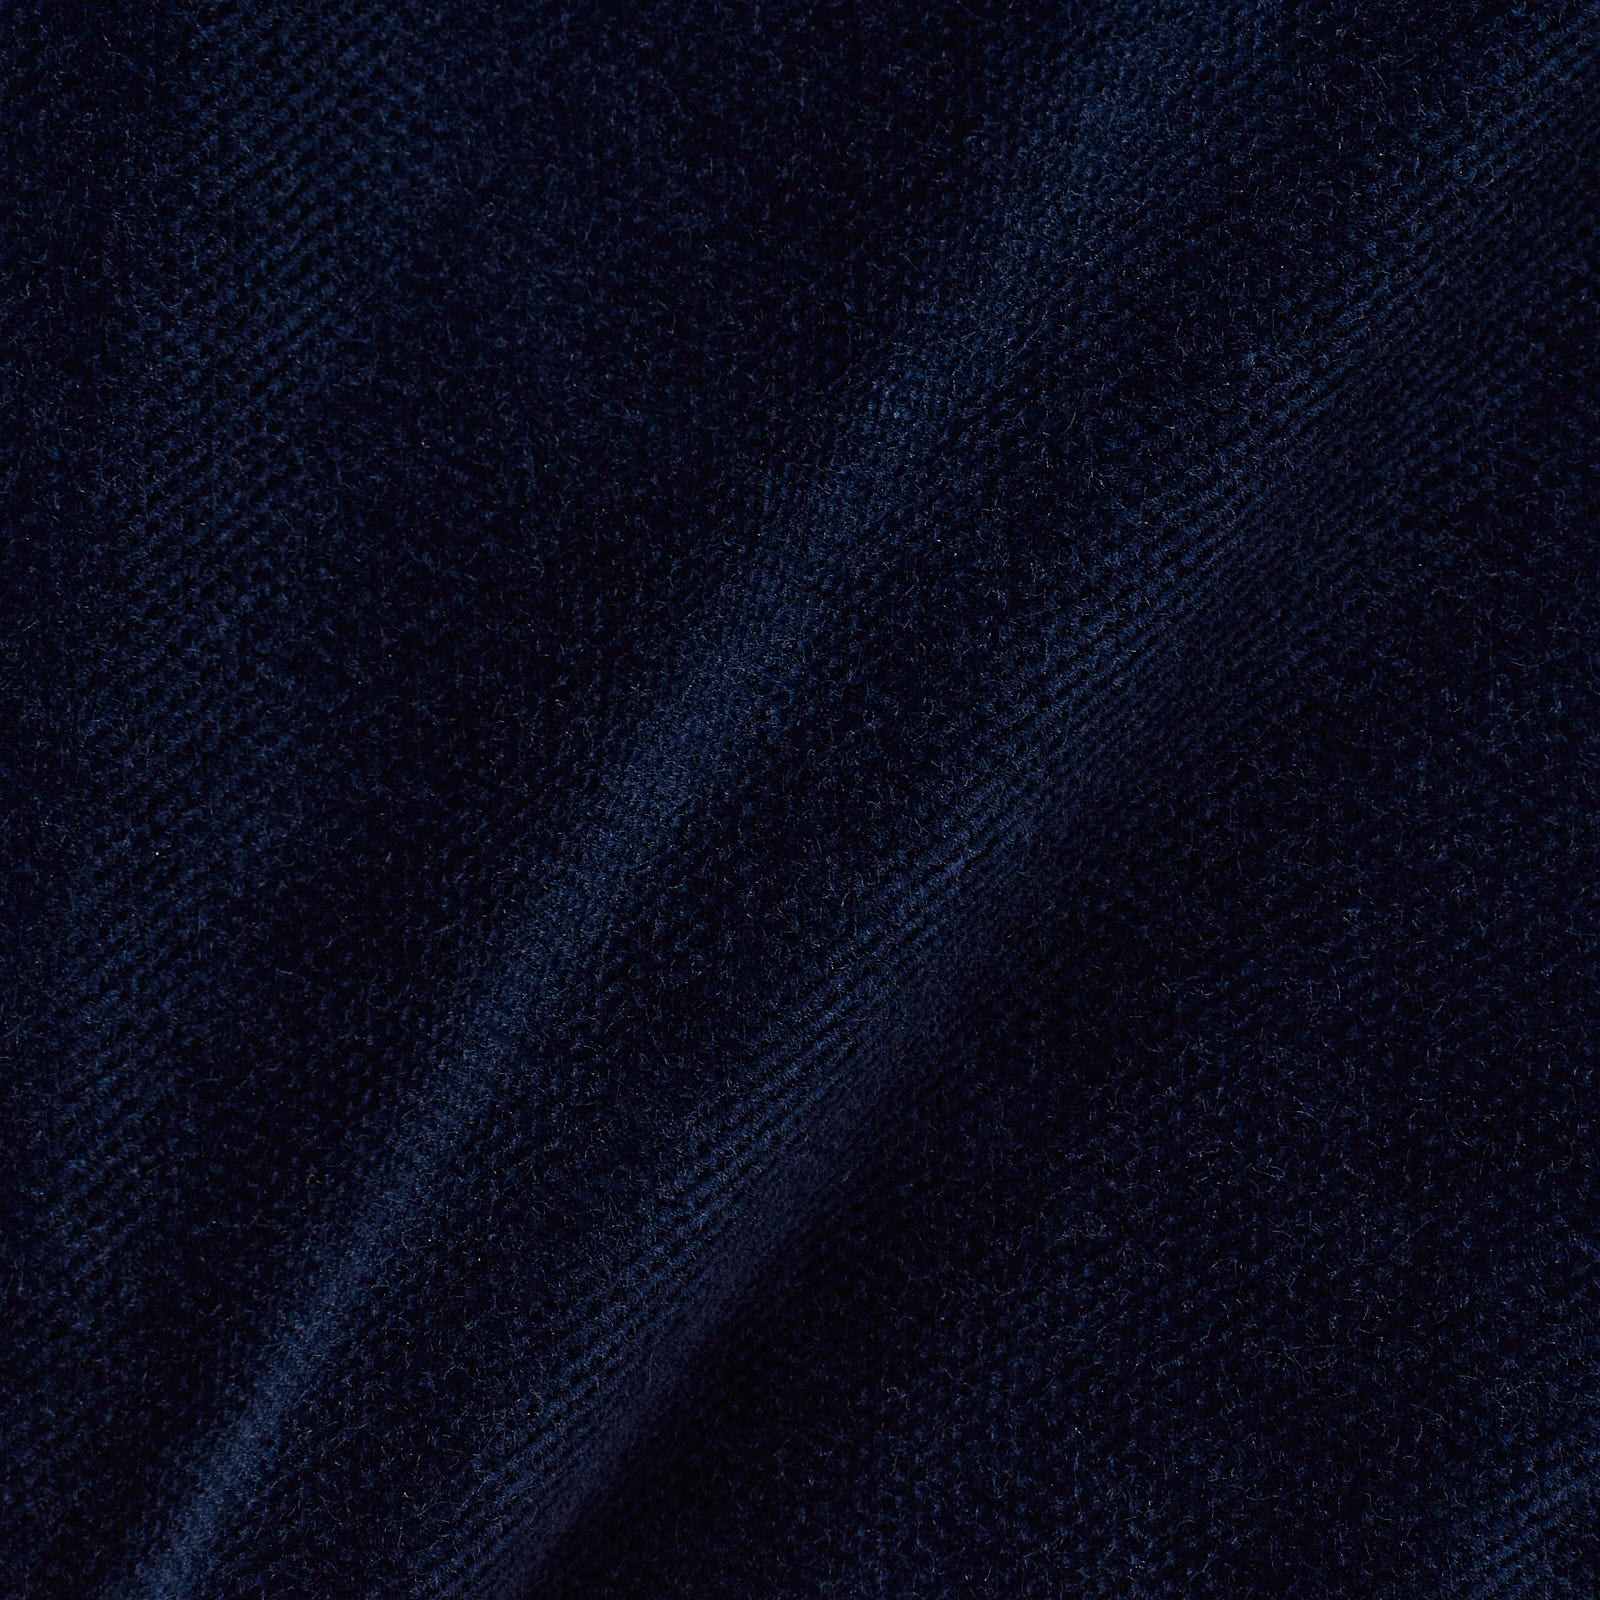 BOGLIOLI Milano "K.Jacket" Navy Blue Cotton Moleskin Unlined Jacket EU 48 NEW US 38 BOGLIOLI